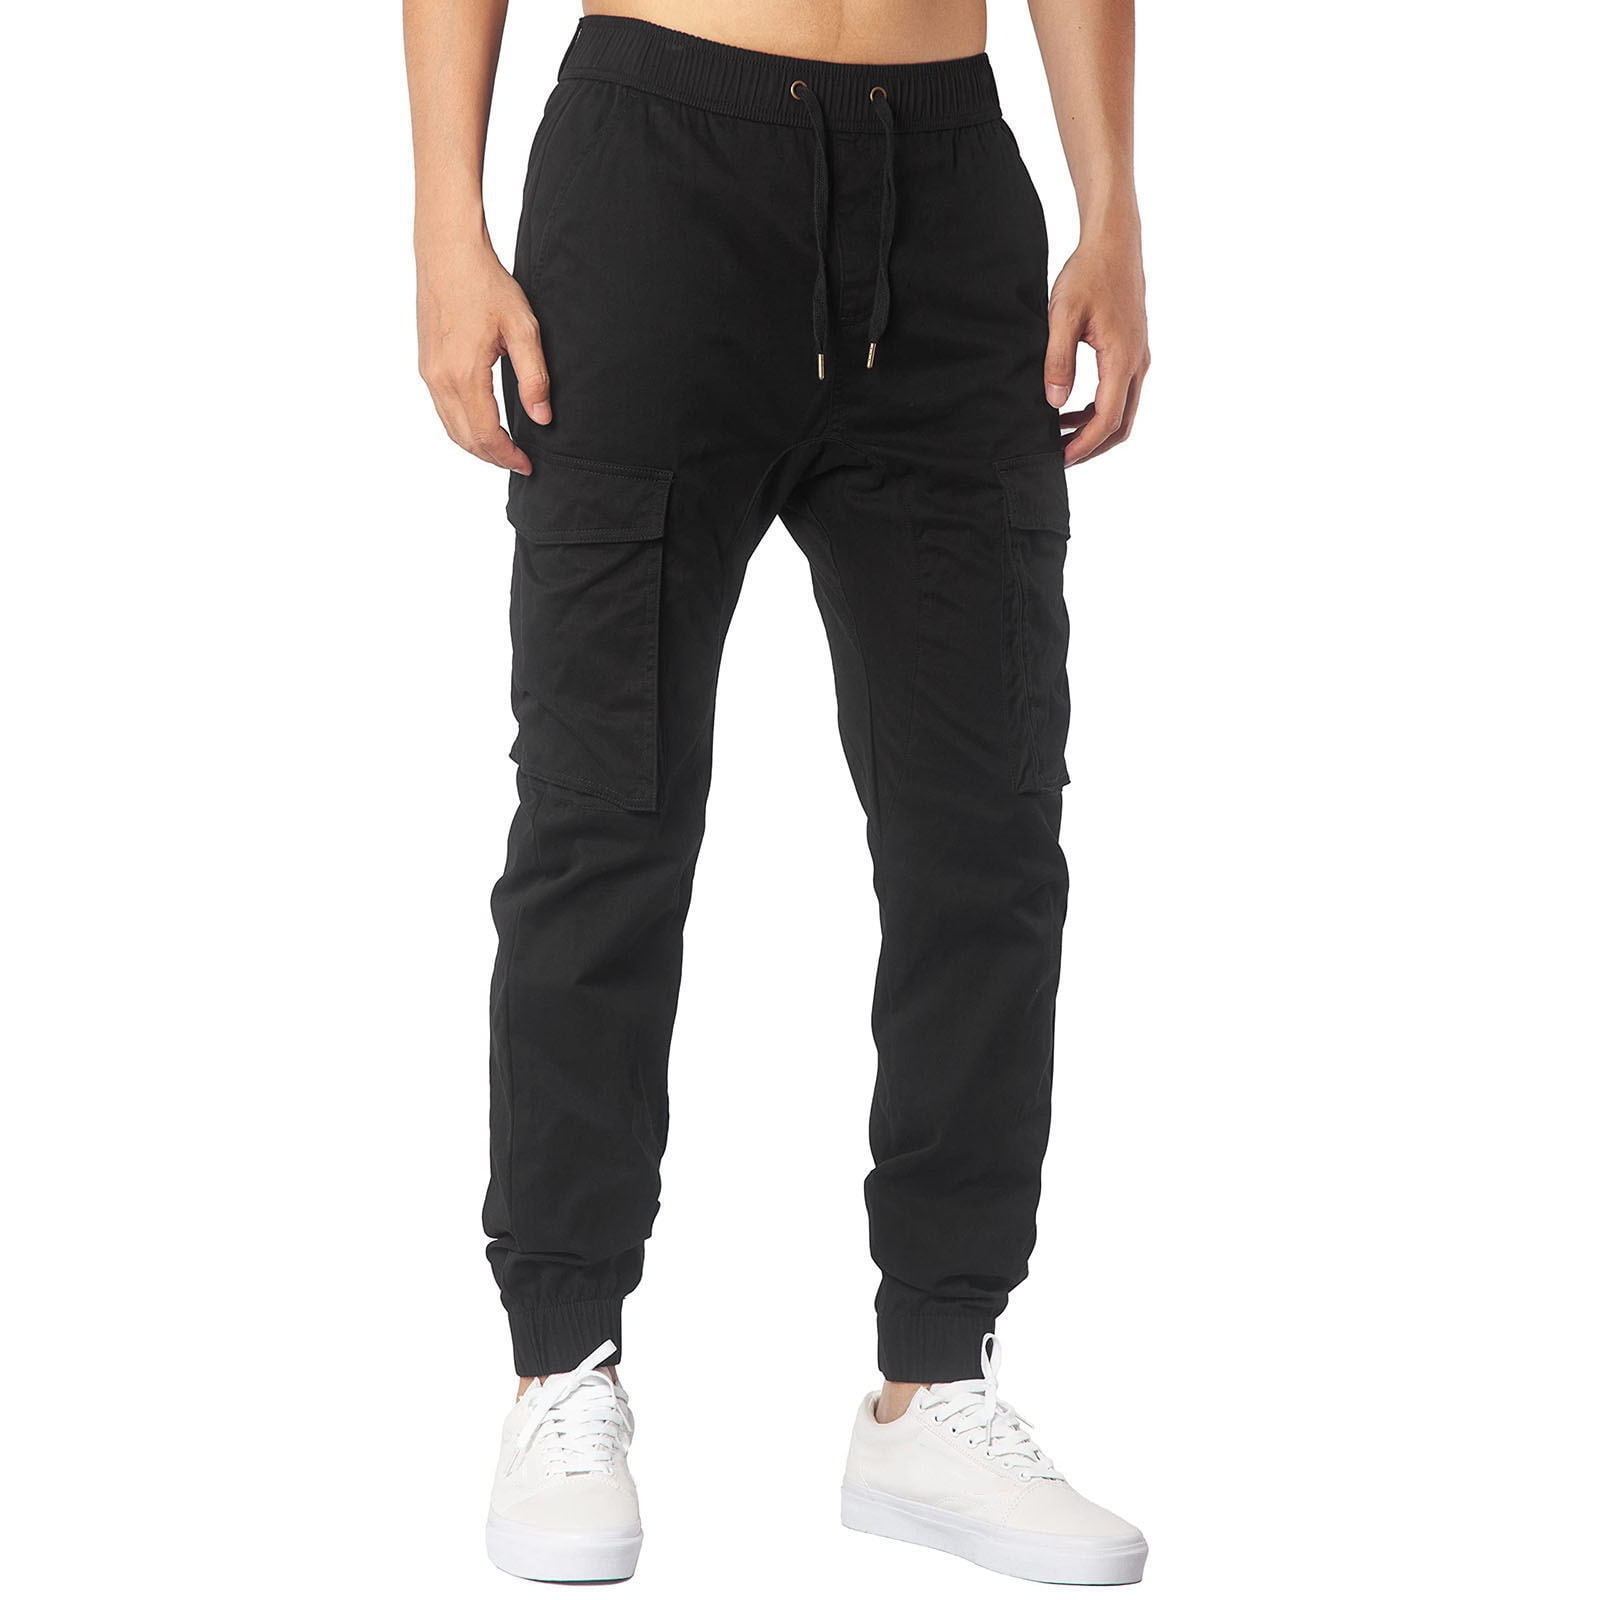 KaLI_store Mens Dress Pants Menâ€˜s Joggers Sweatpants - Fashion Cargo Pants  Gym Track Pants Slim Comfortable Trousers Grey,M - Walmart.com